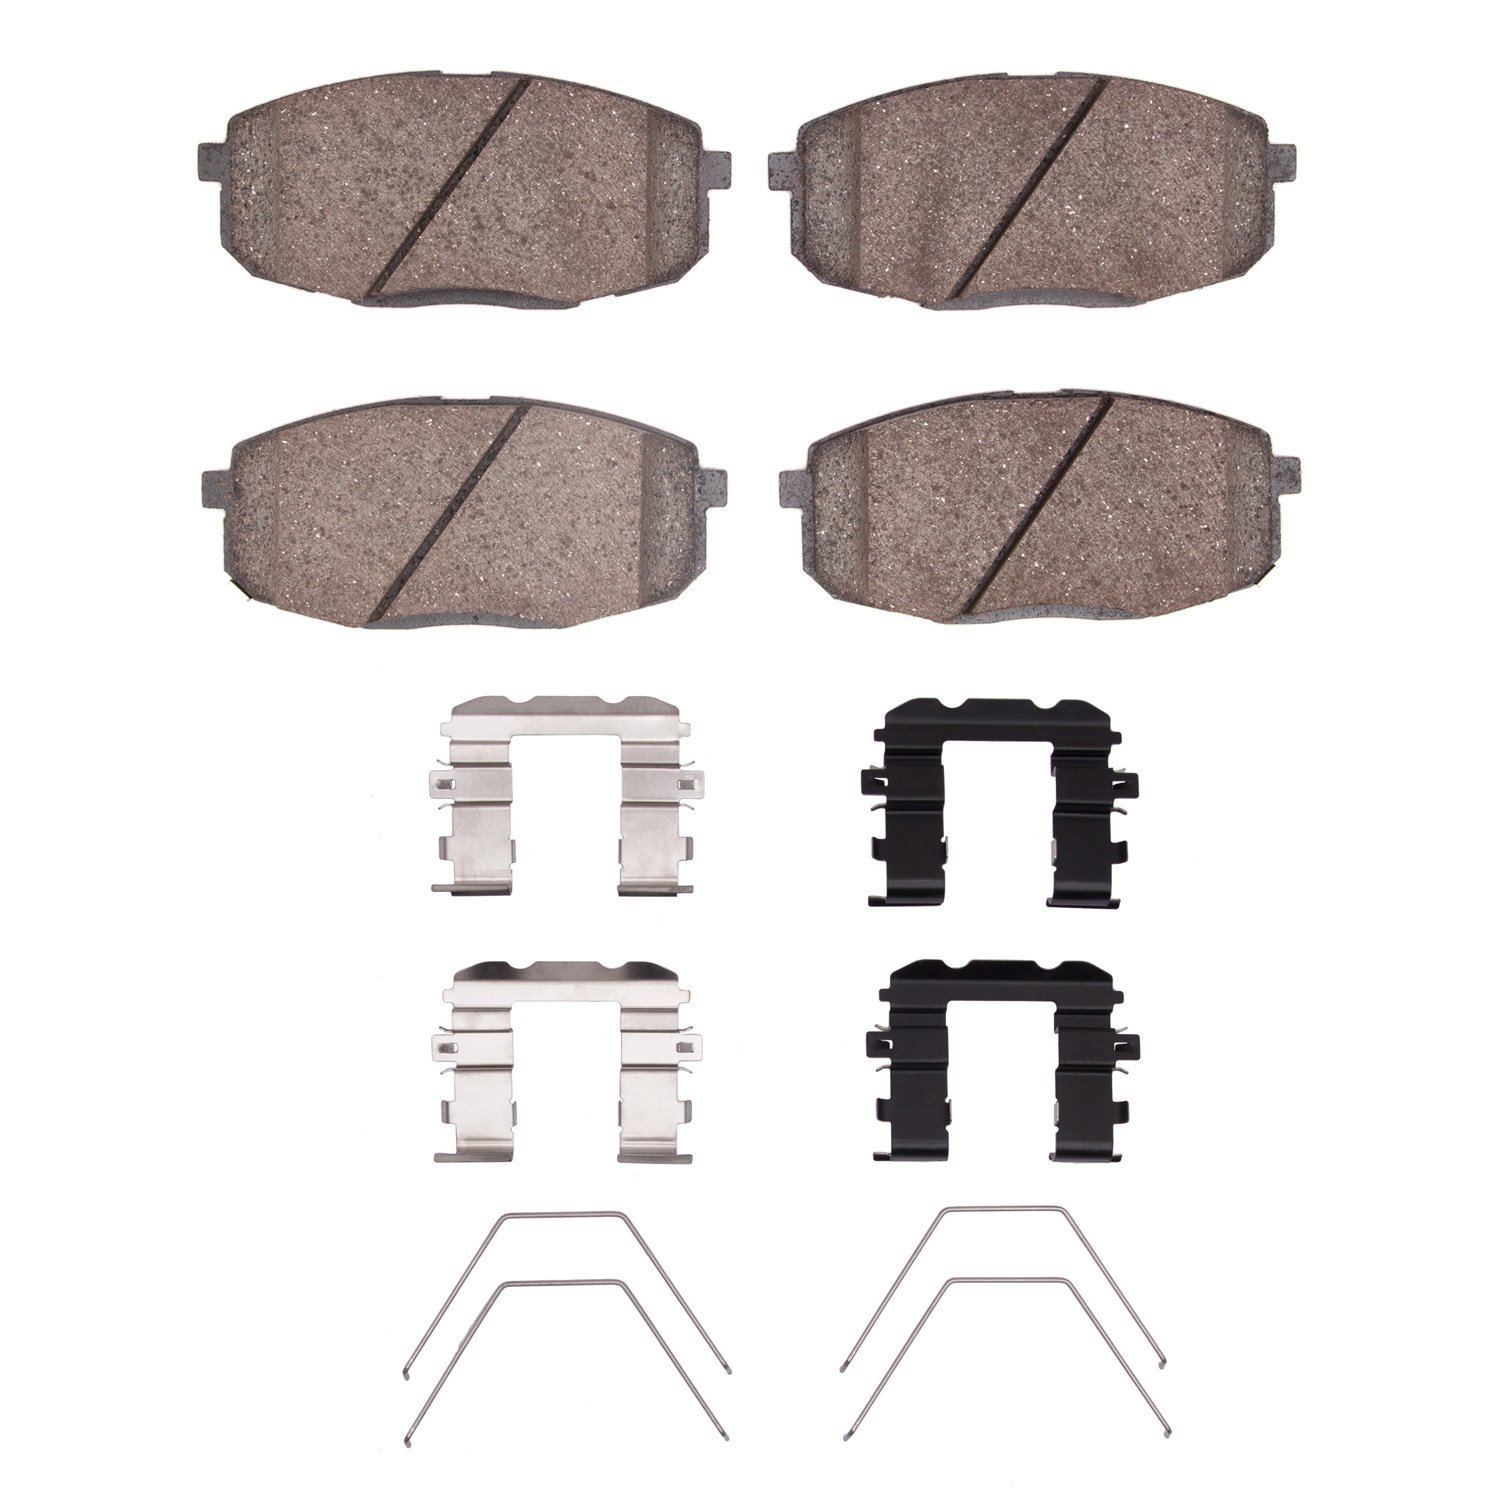 1310-2035-01 3000-Series Ceramic Brake Pads & Hardware Kit, Fits Select Kia/Hyundai/Genesis, Position: Front